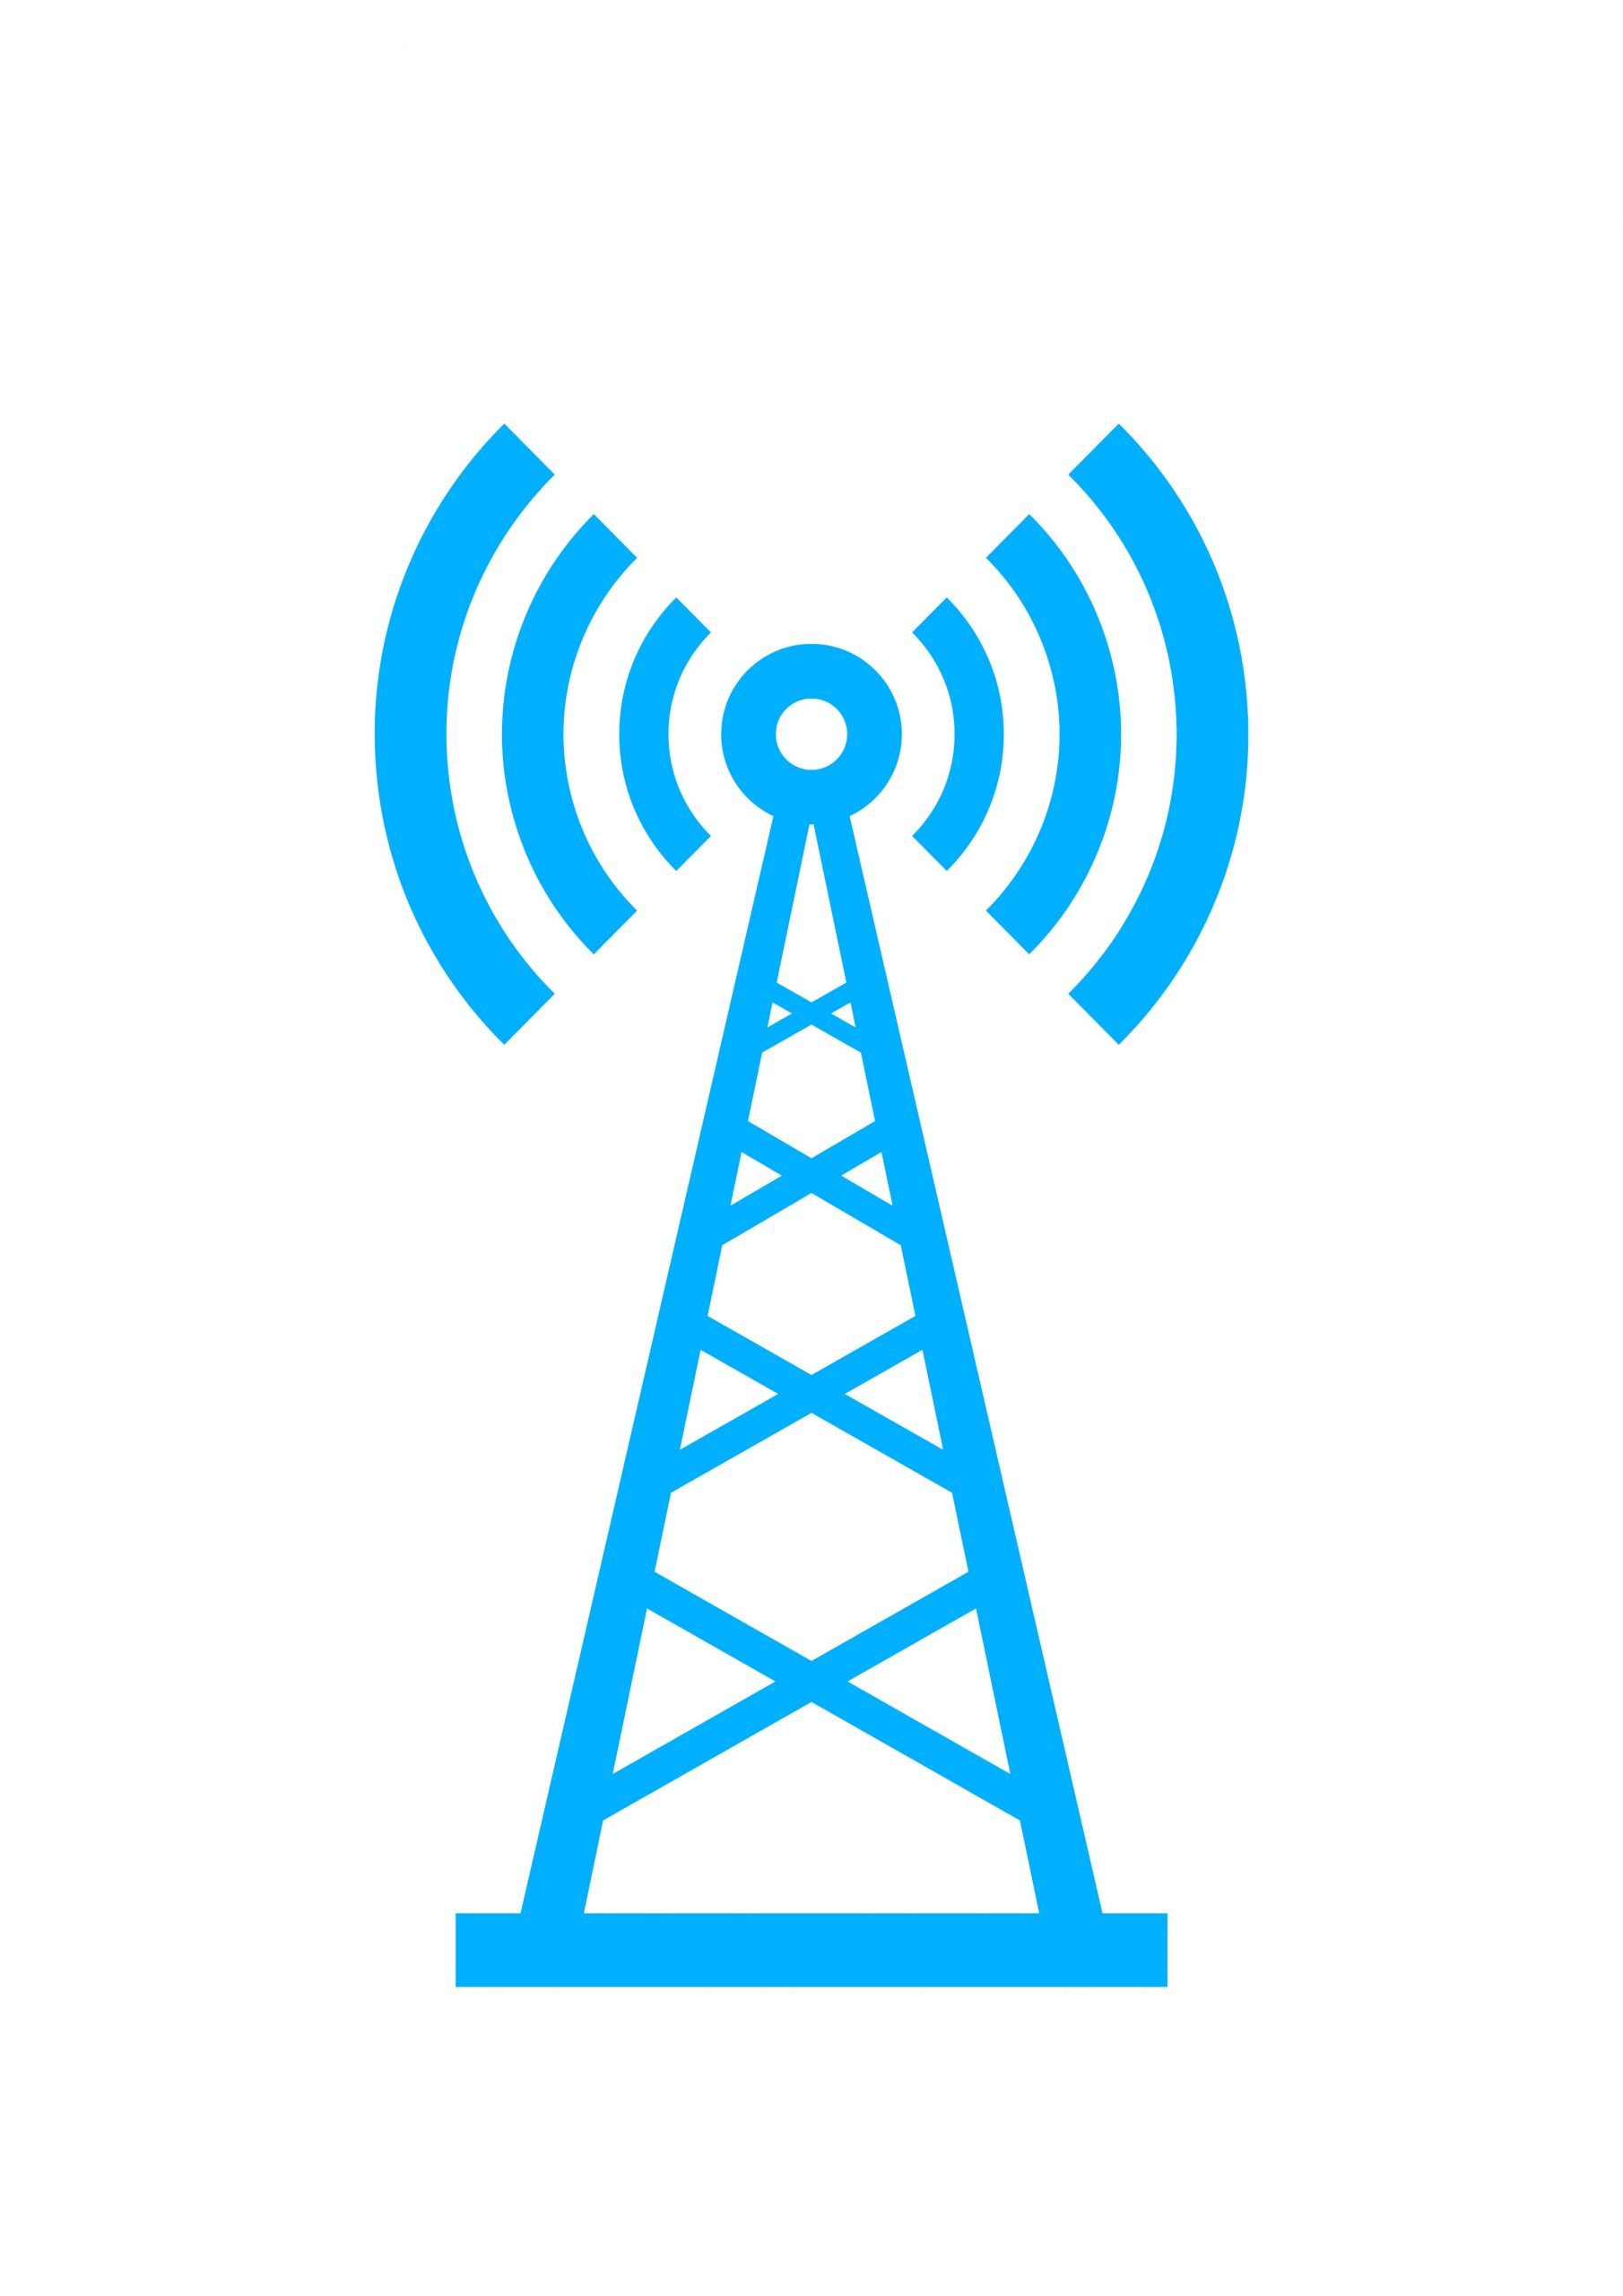 Radio Tower - Amateur Radio Bill